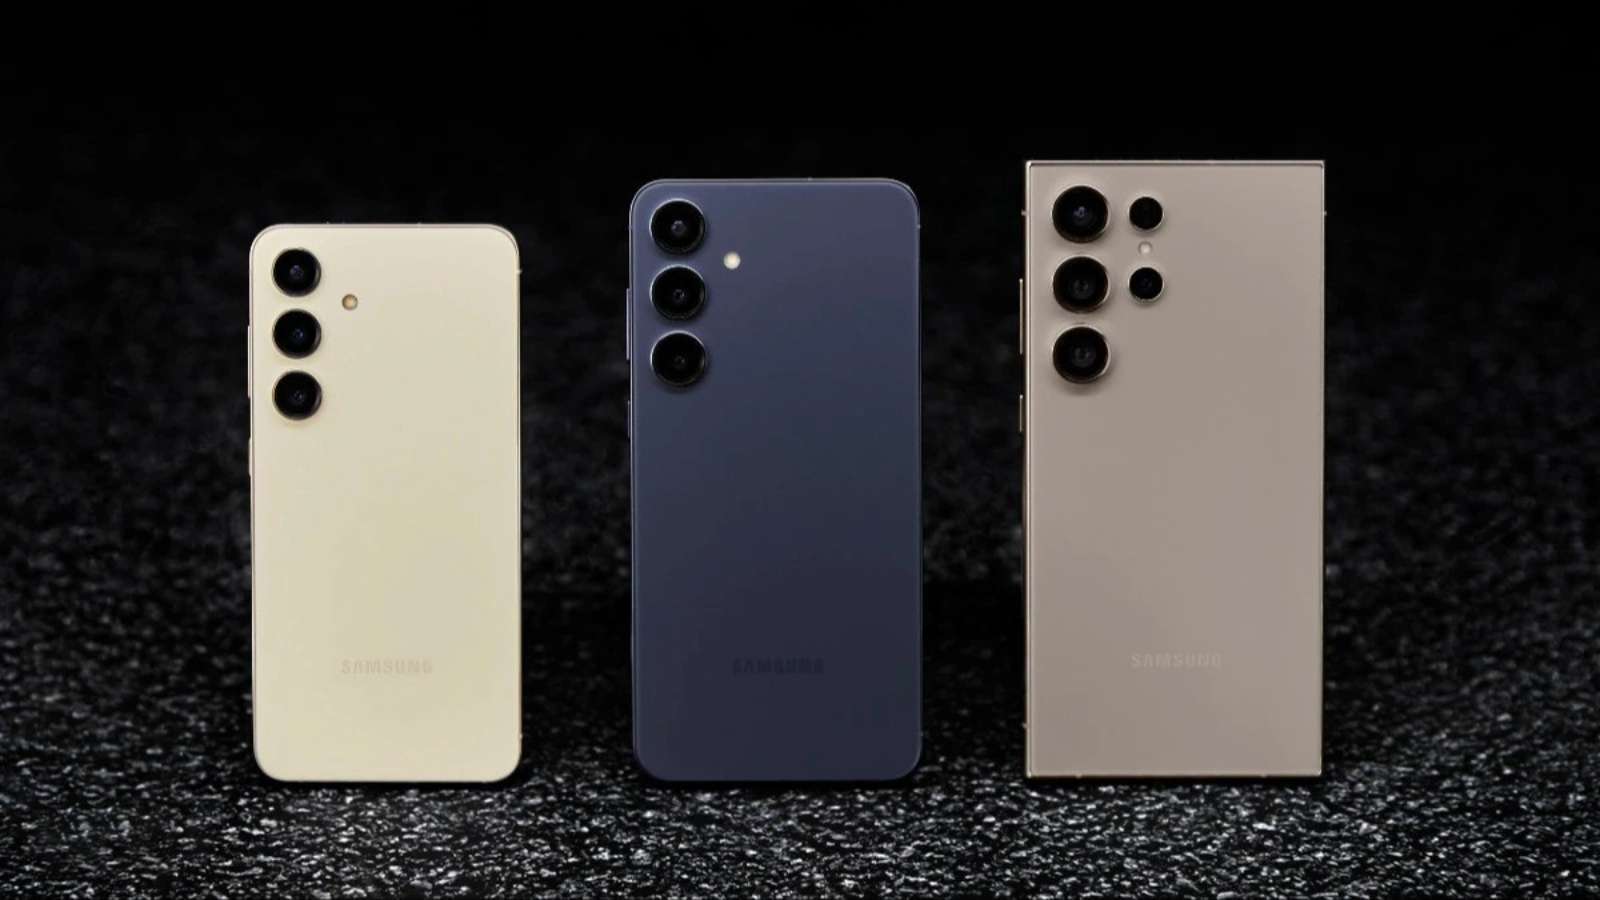 All three Samsung Galaxy S23 series phones